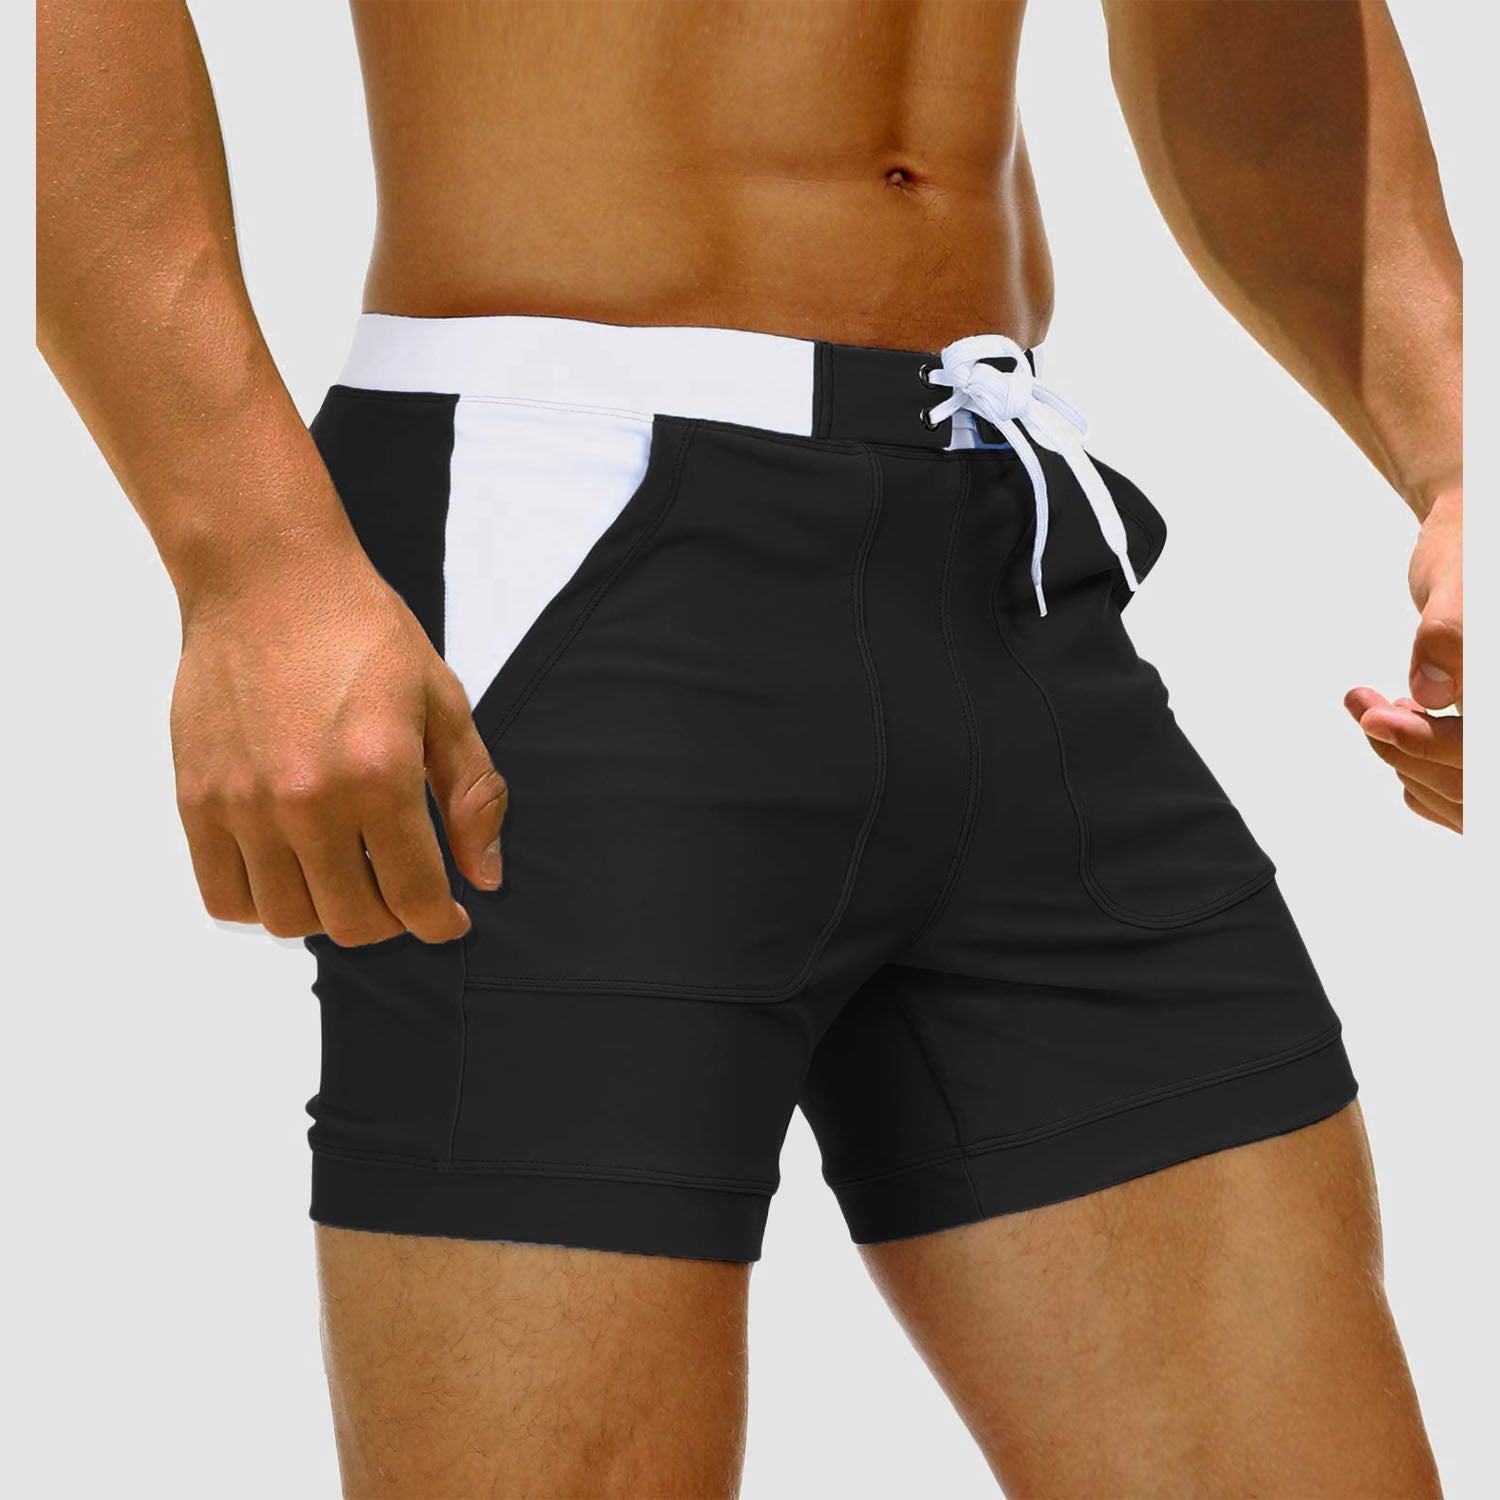 Men's Swim Trunks Square Leg with Pockets Mesh Lining Beach Shorts Underwear